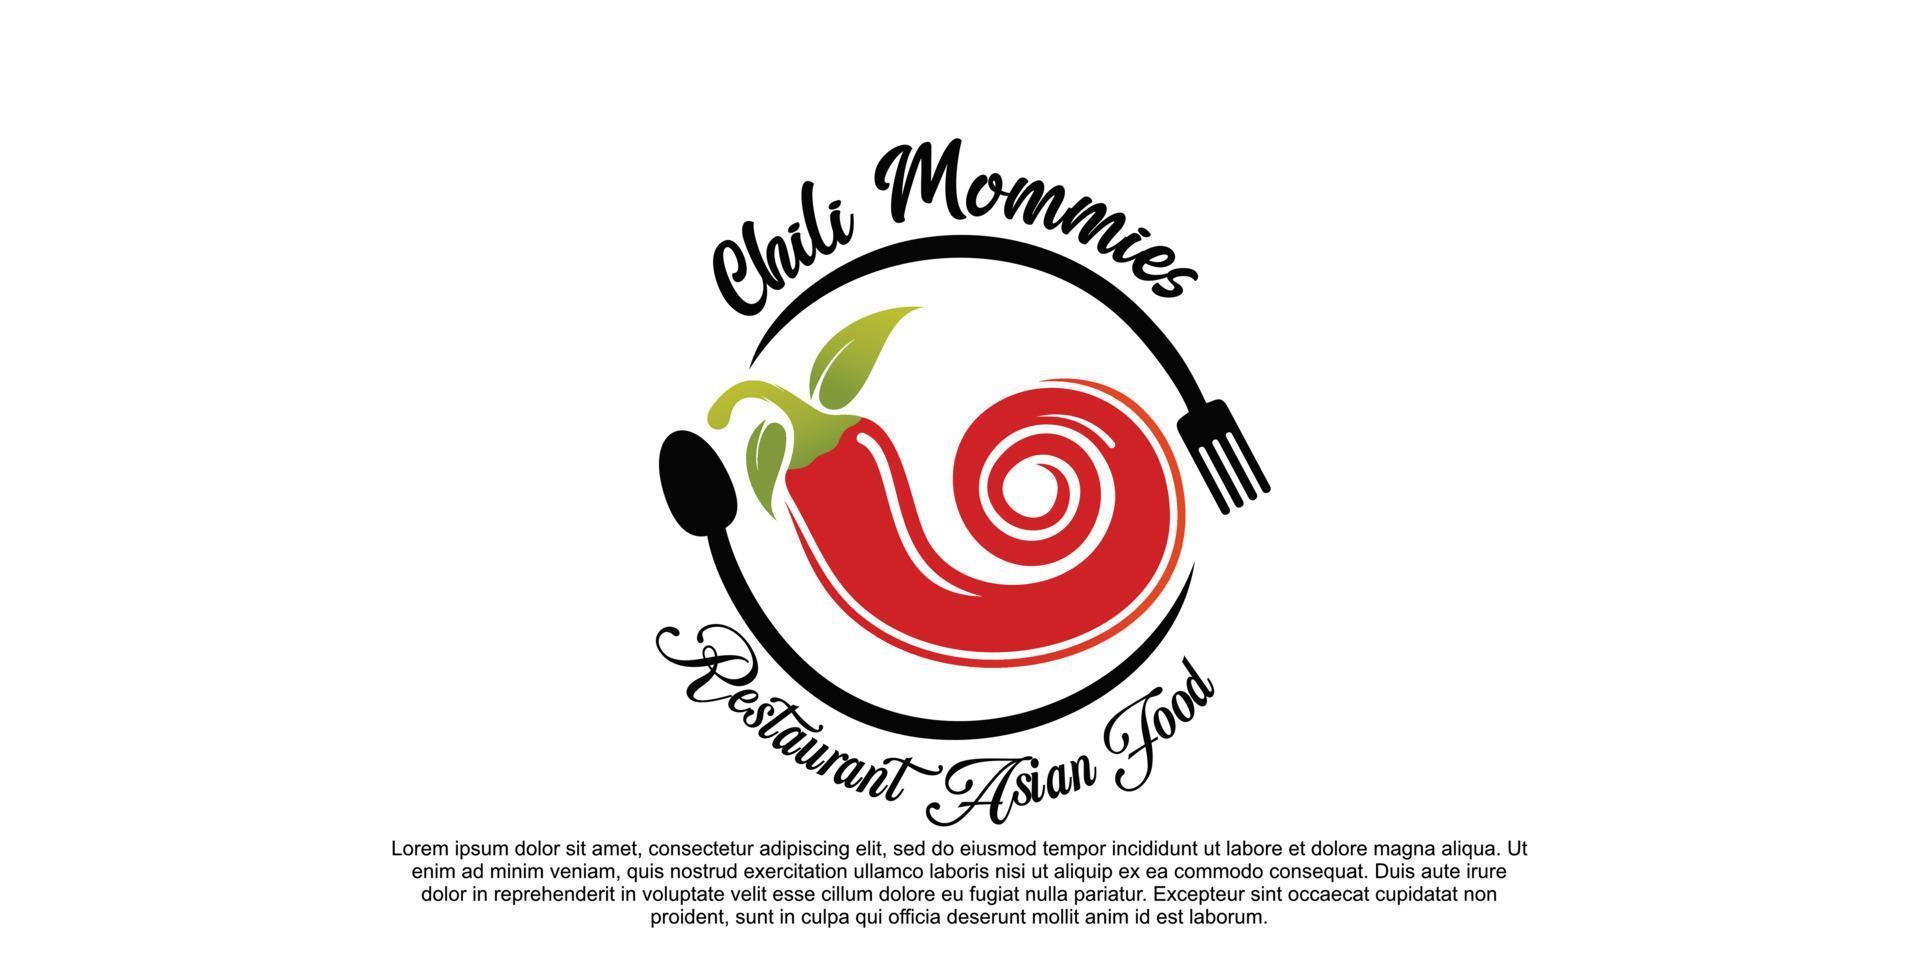 Chili Mommies logo design with creative concept Premium Vector part 2